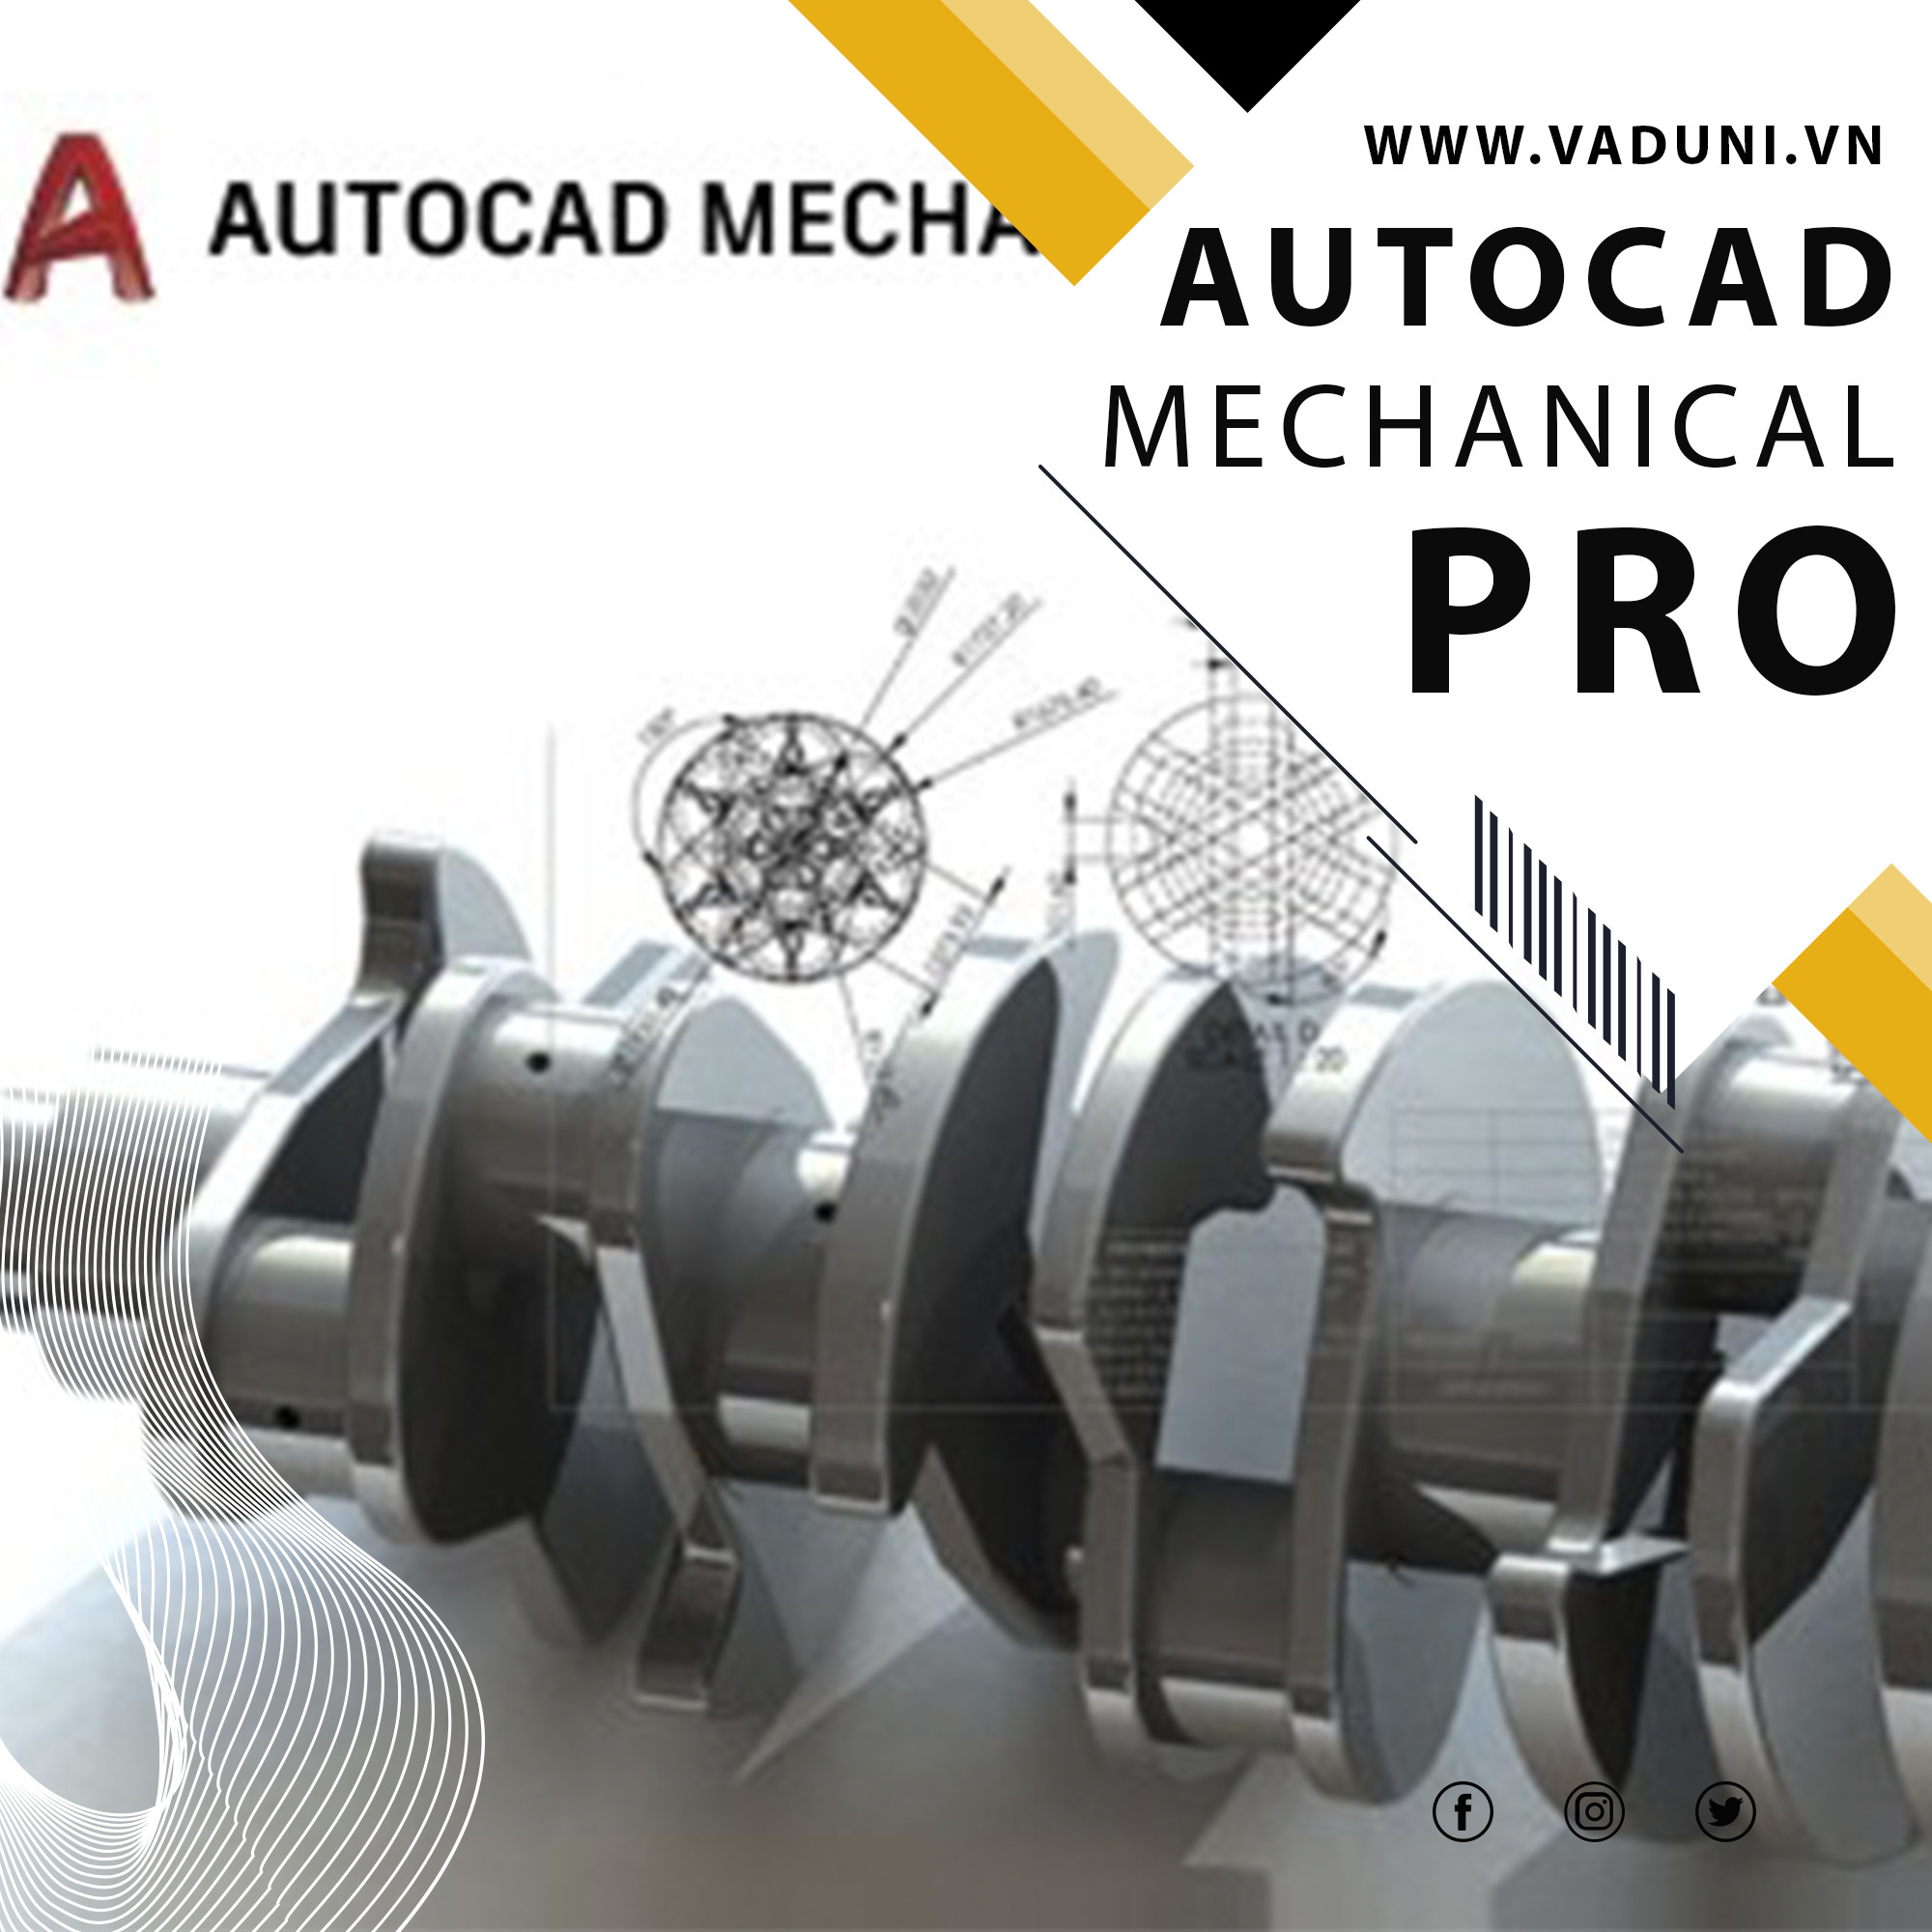 Autocad mechanical Pro